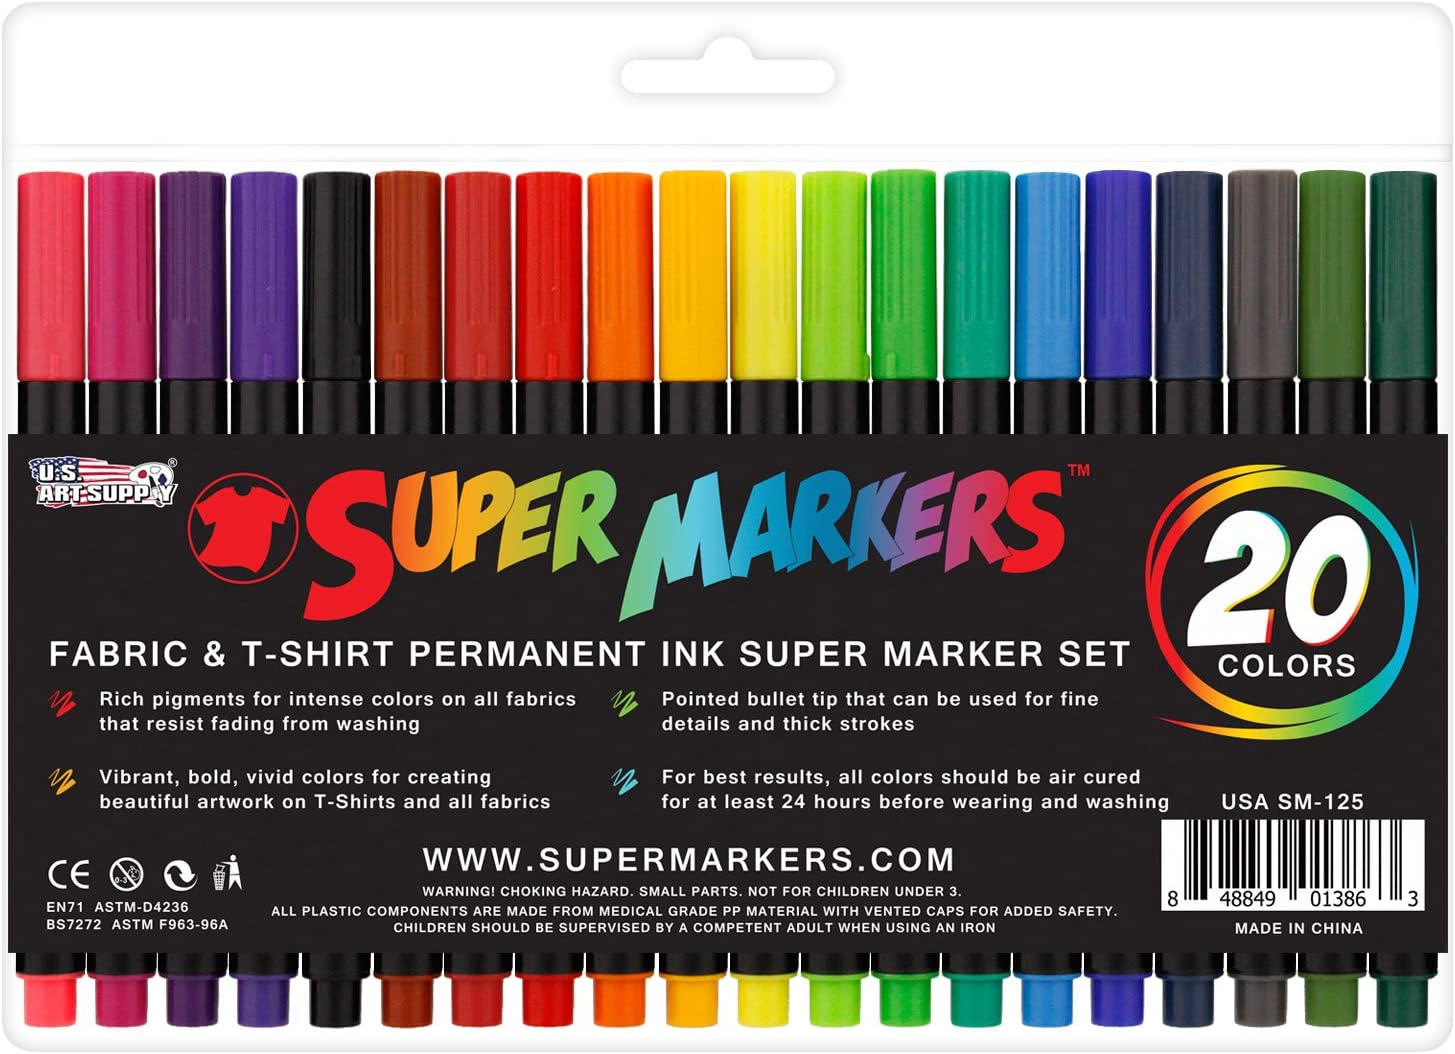 Super Markers 20 Colors